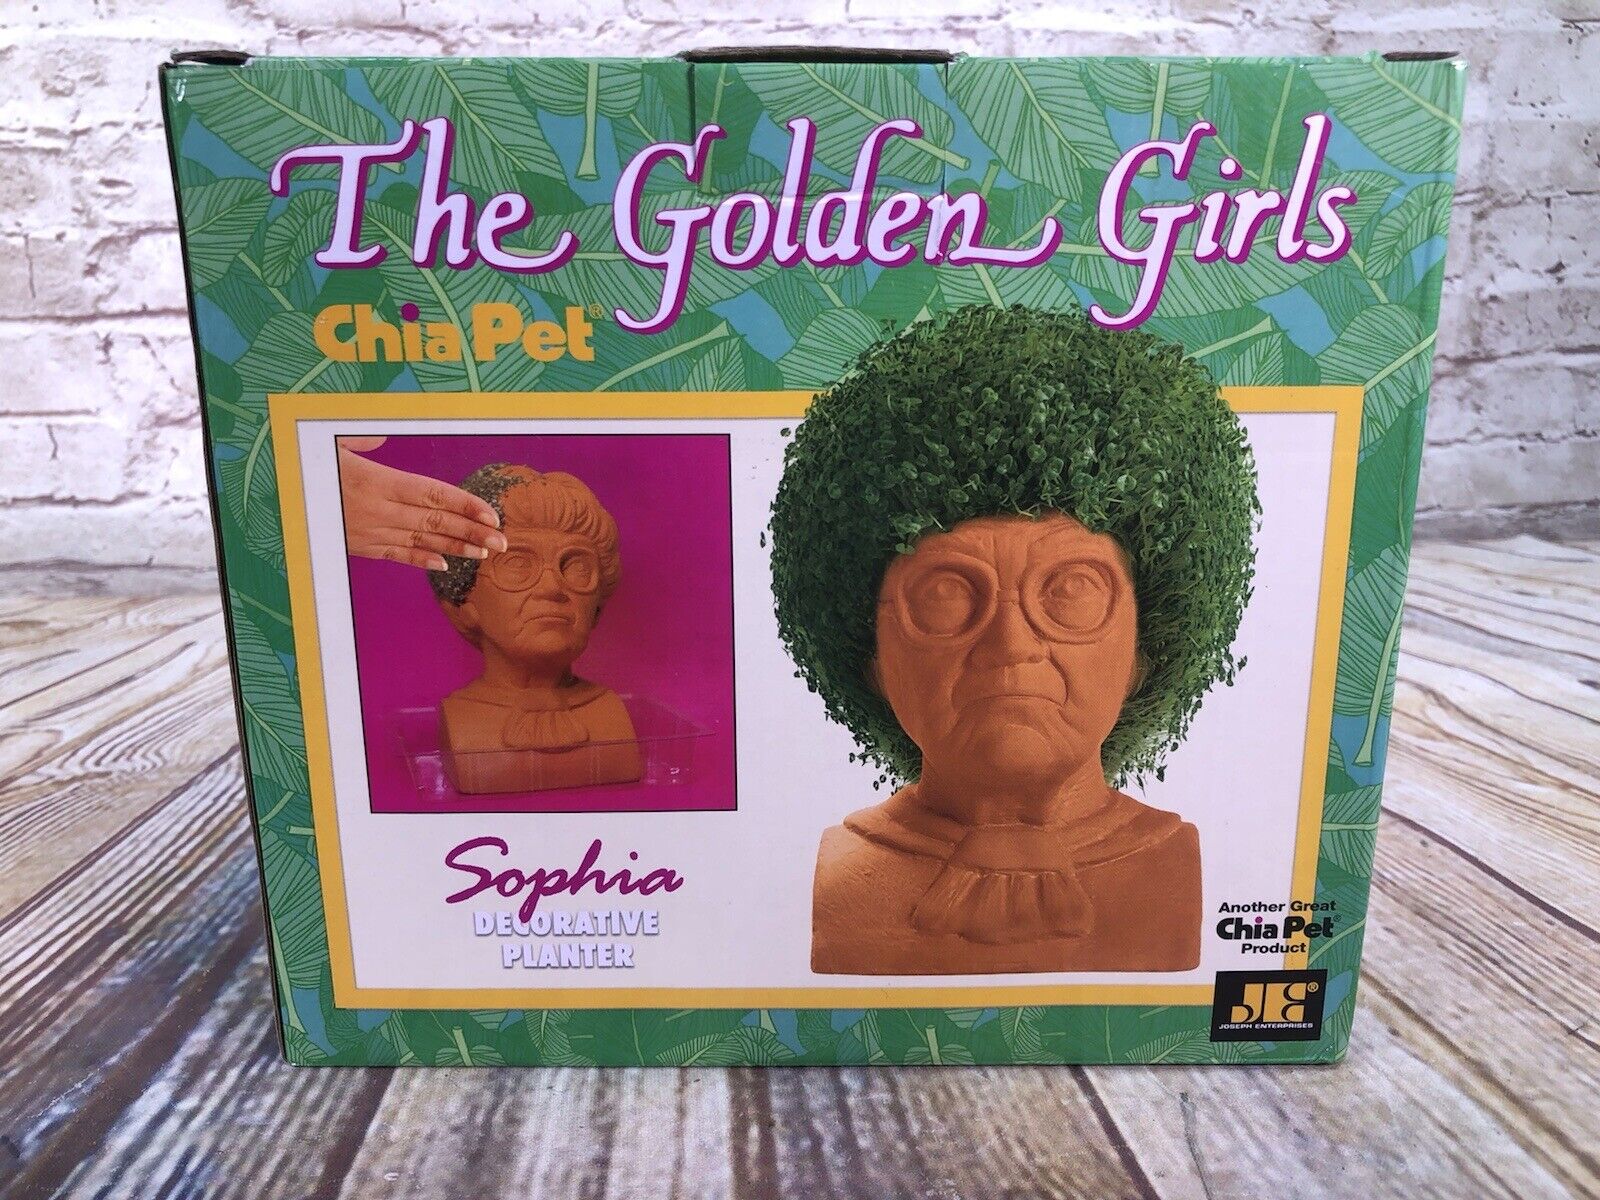 NEW Chia Pet The Golden Girls - Sophia Decorative Pottery Planter